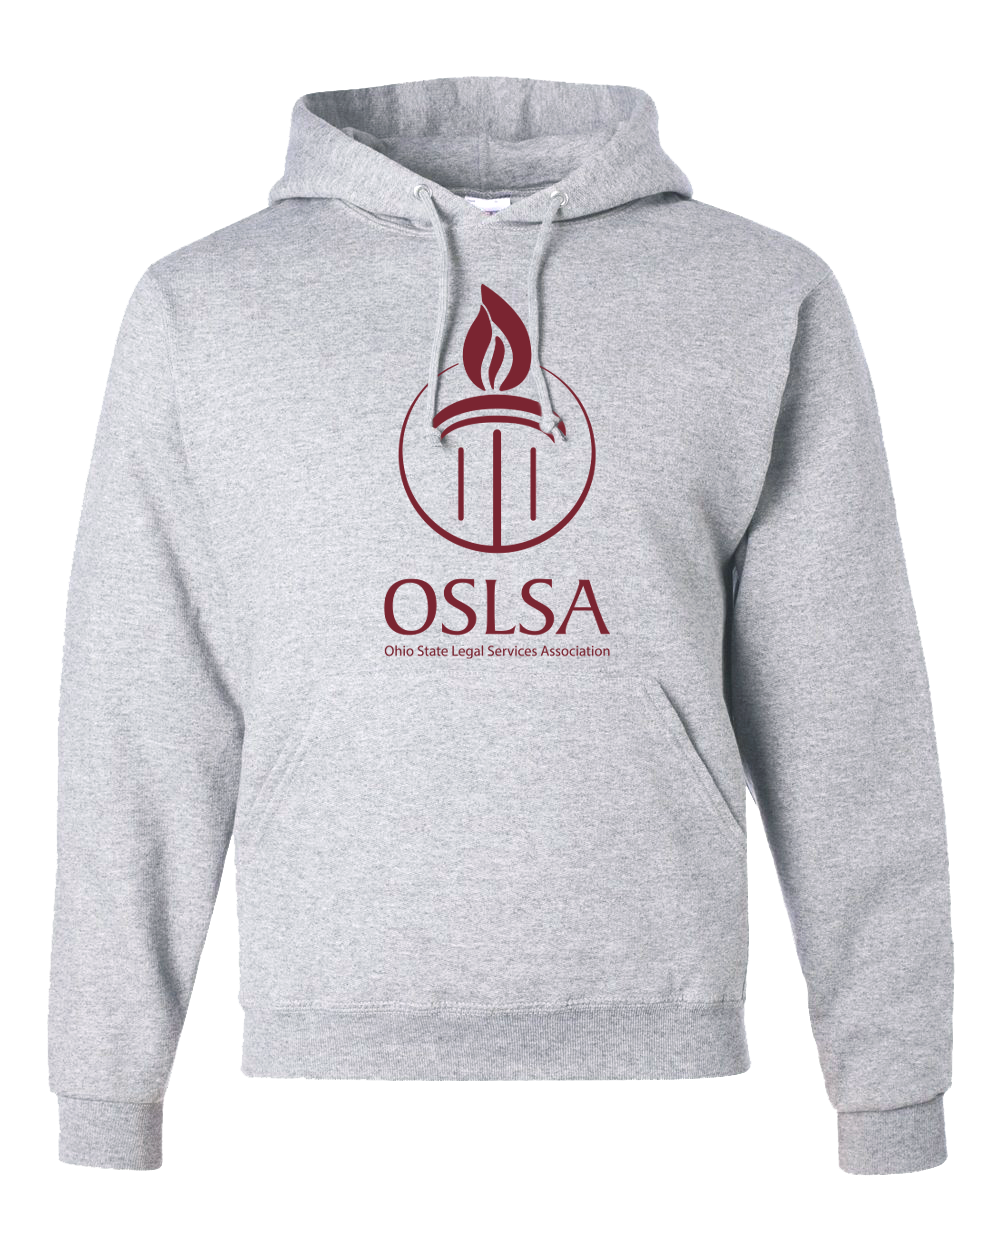 OSLSA - Ohio State Legal Services Association Hoodie